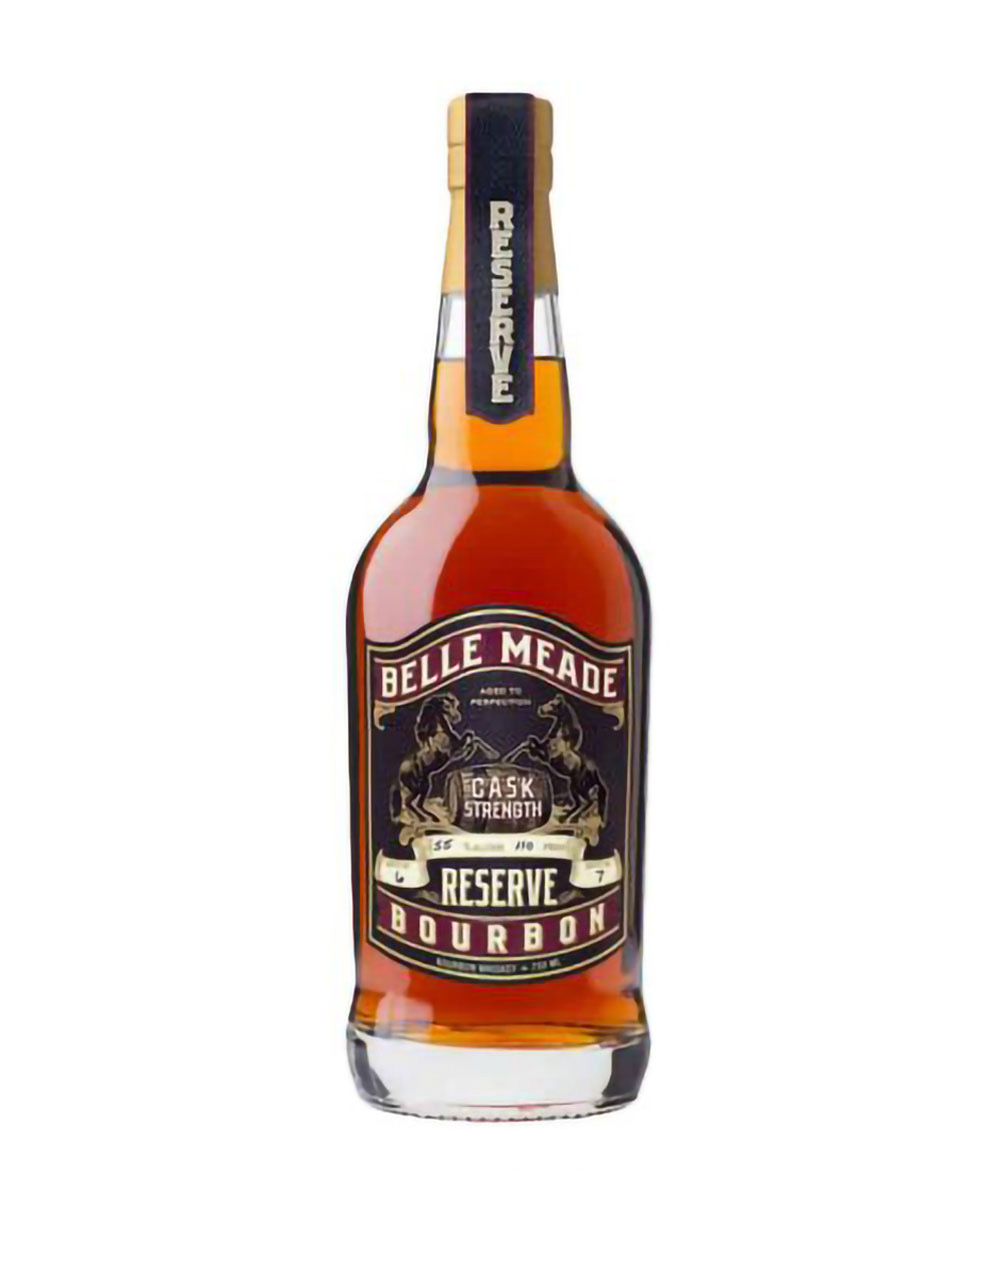 Belle Meade Cask Strength Reserve Bourbon Whiskey